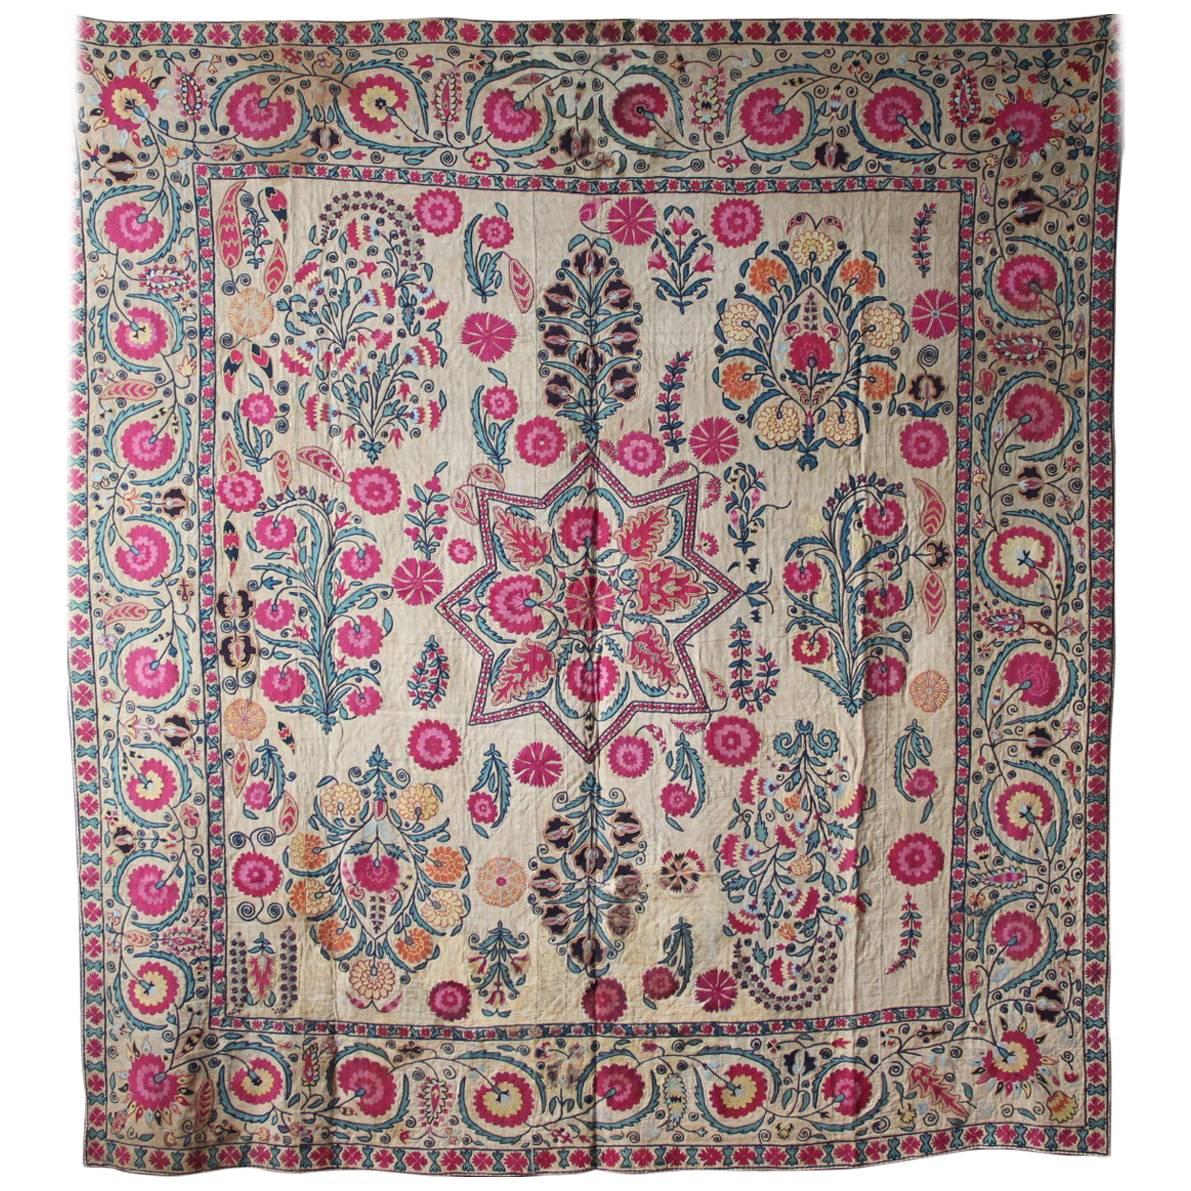 Early 19th Century Ura Tube Suzani, Silk Embroidery, Uzbekistan